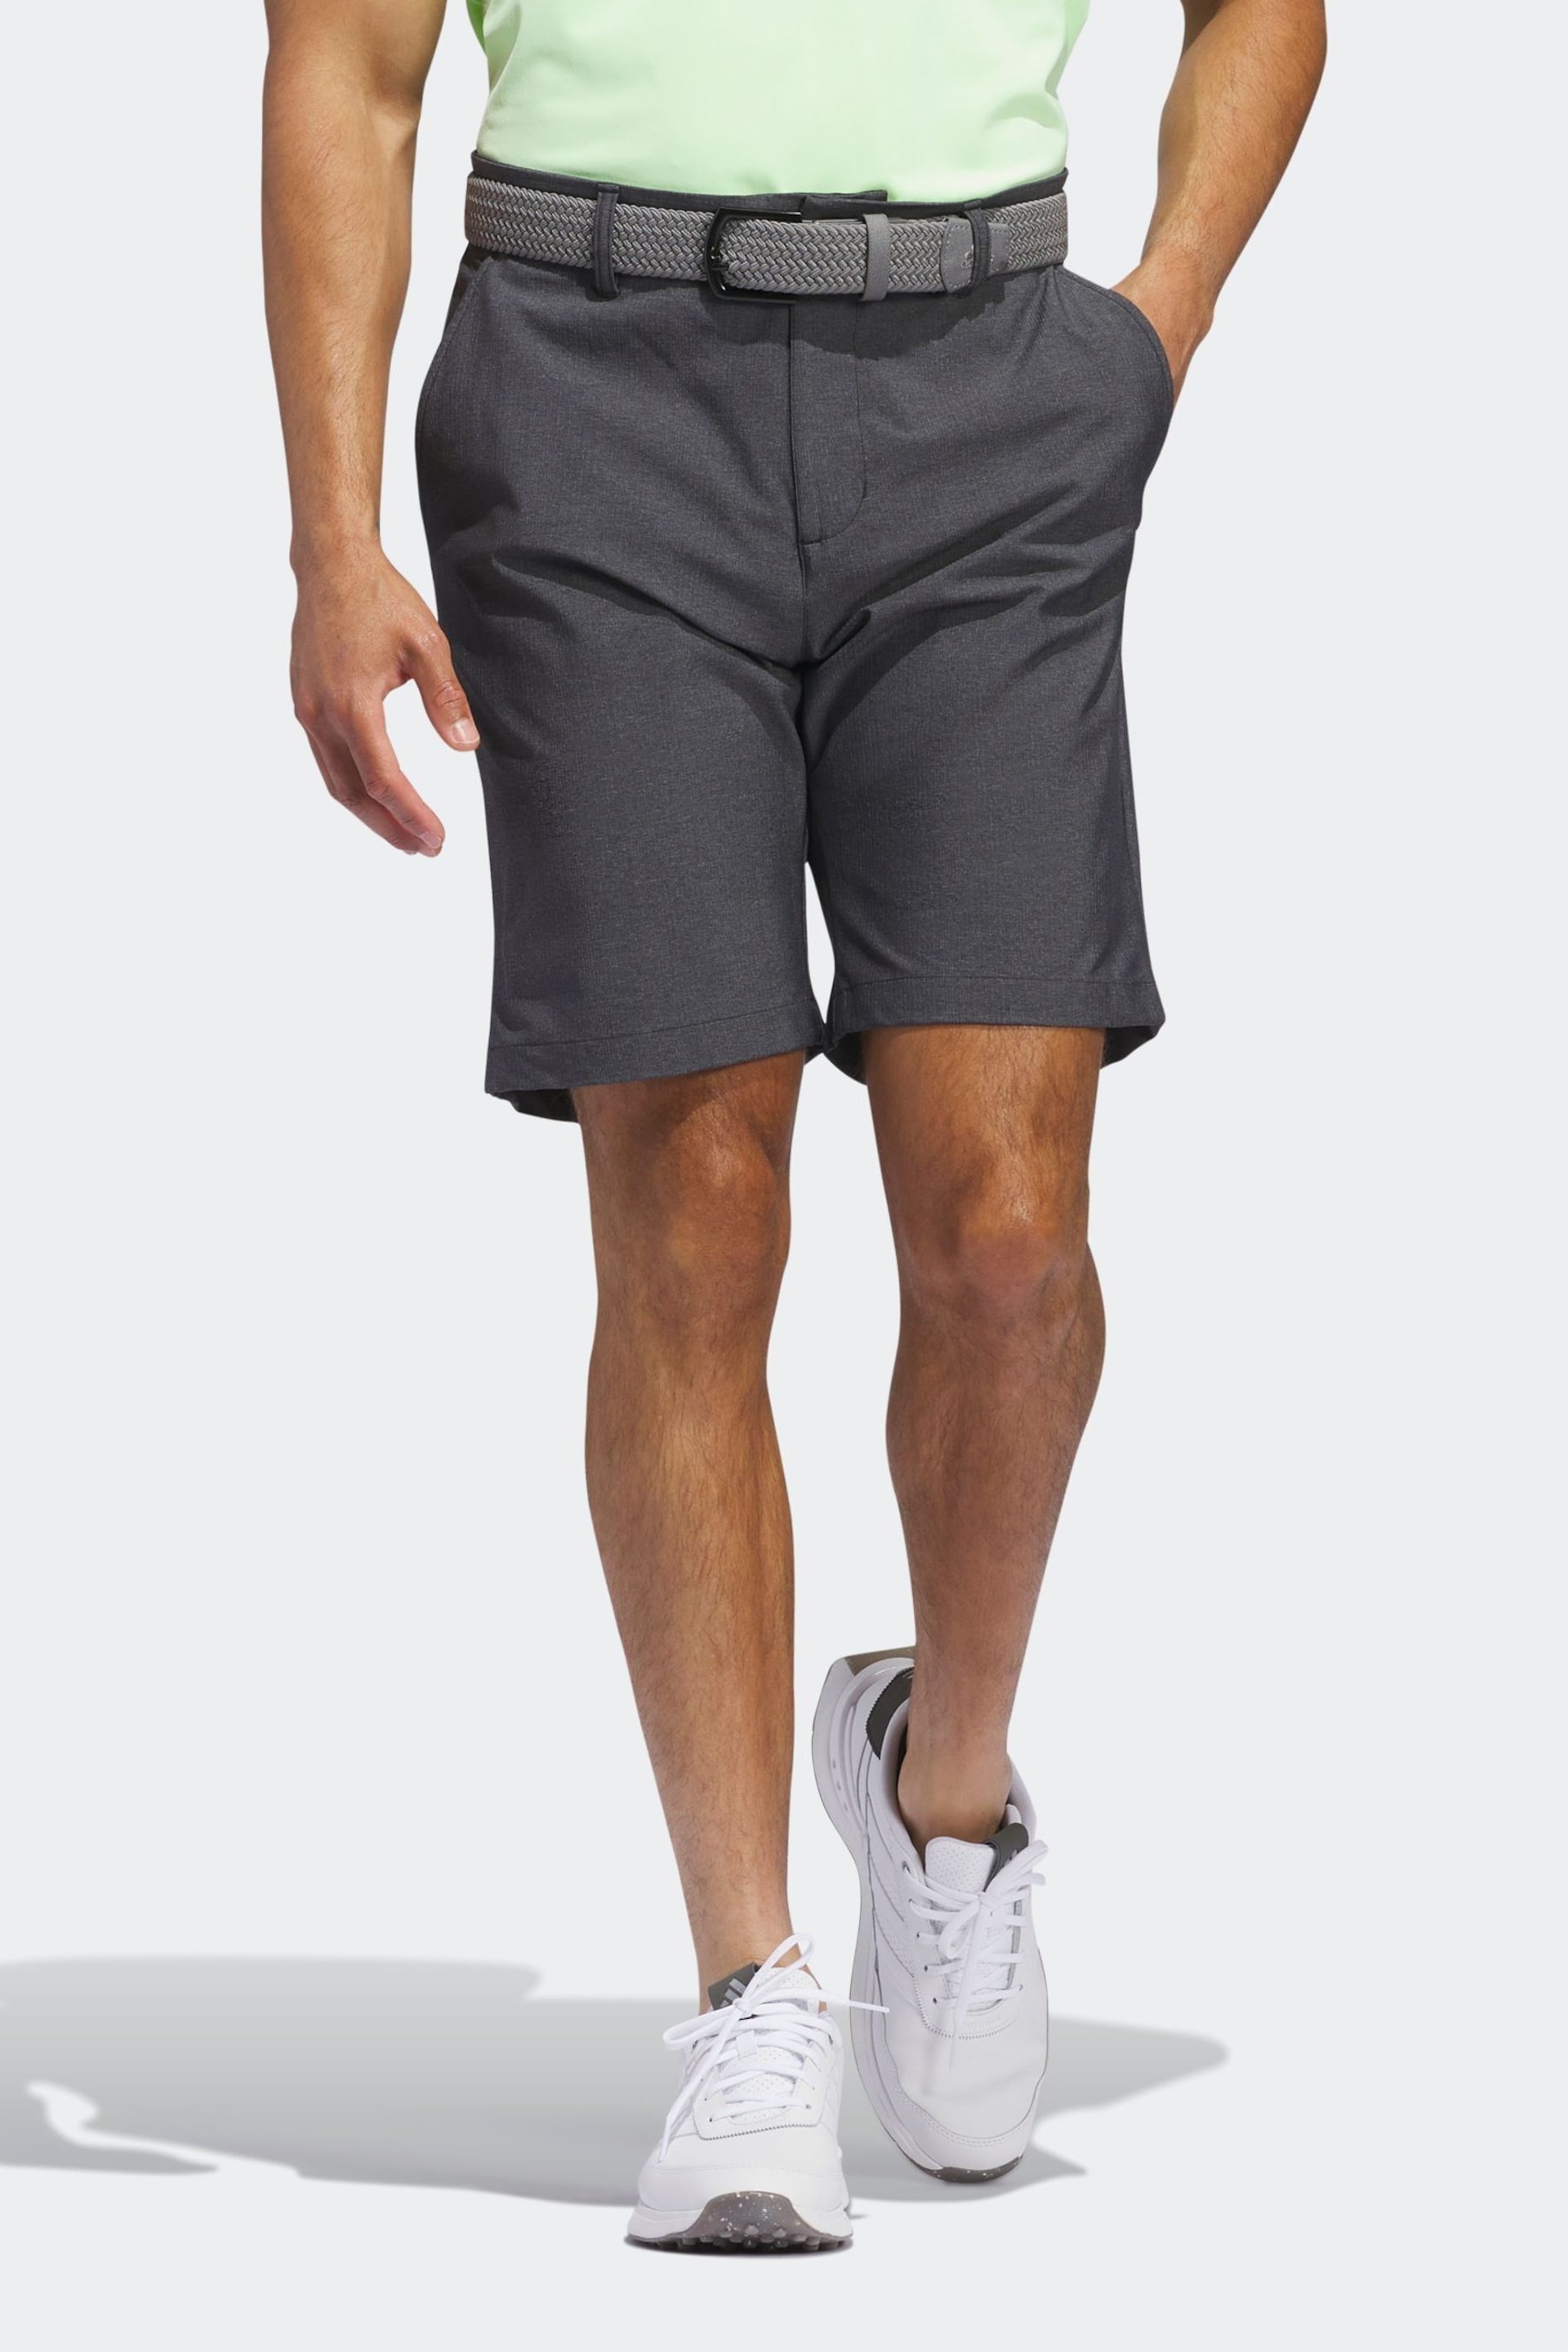 adidas Golf Ultimate 365 Printed Black Shorts - Image 1 of 5